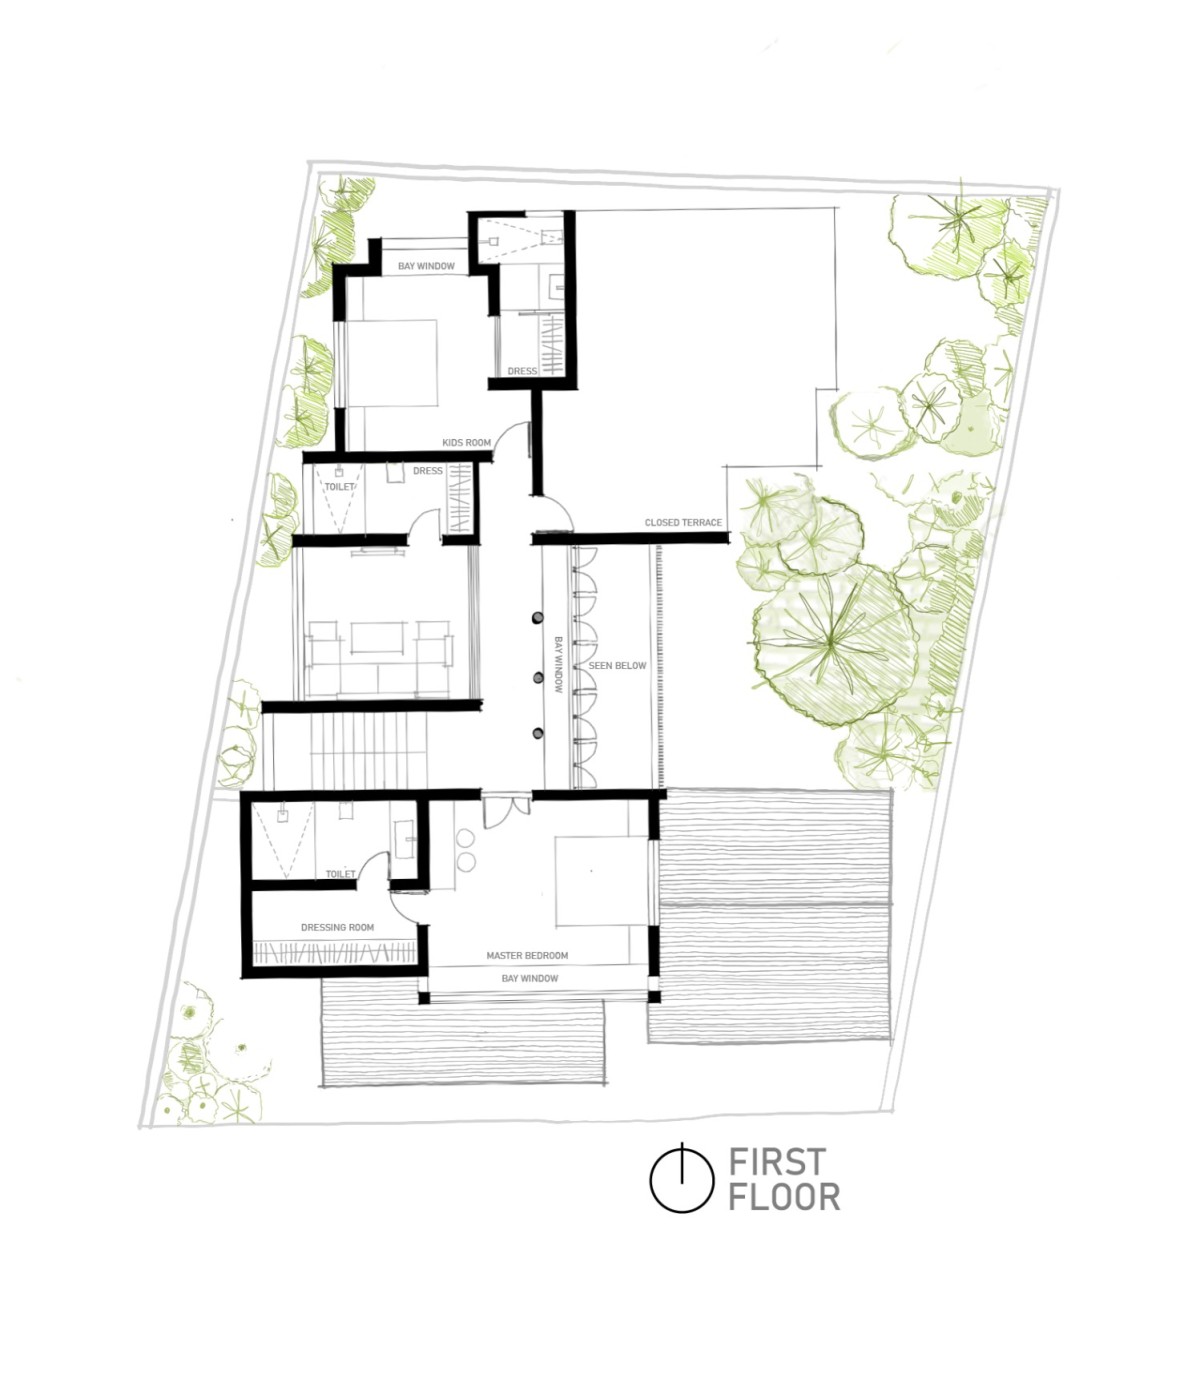 First Floor Plan of Sarada Vihar by 7th Hue Architecture Studio